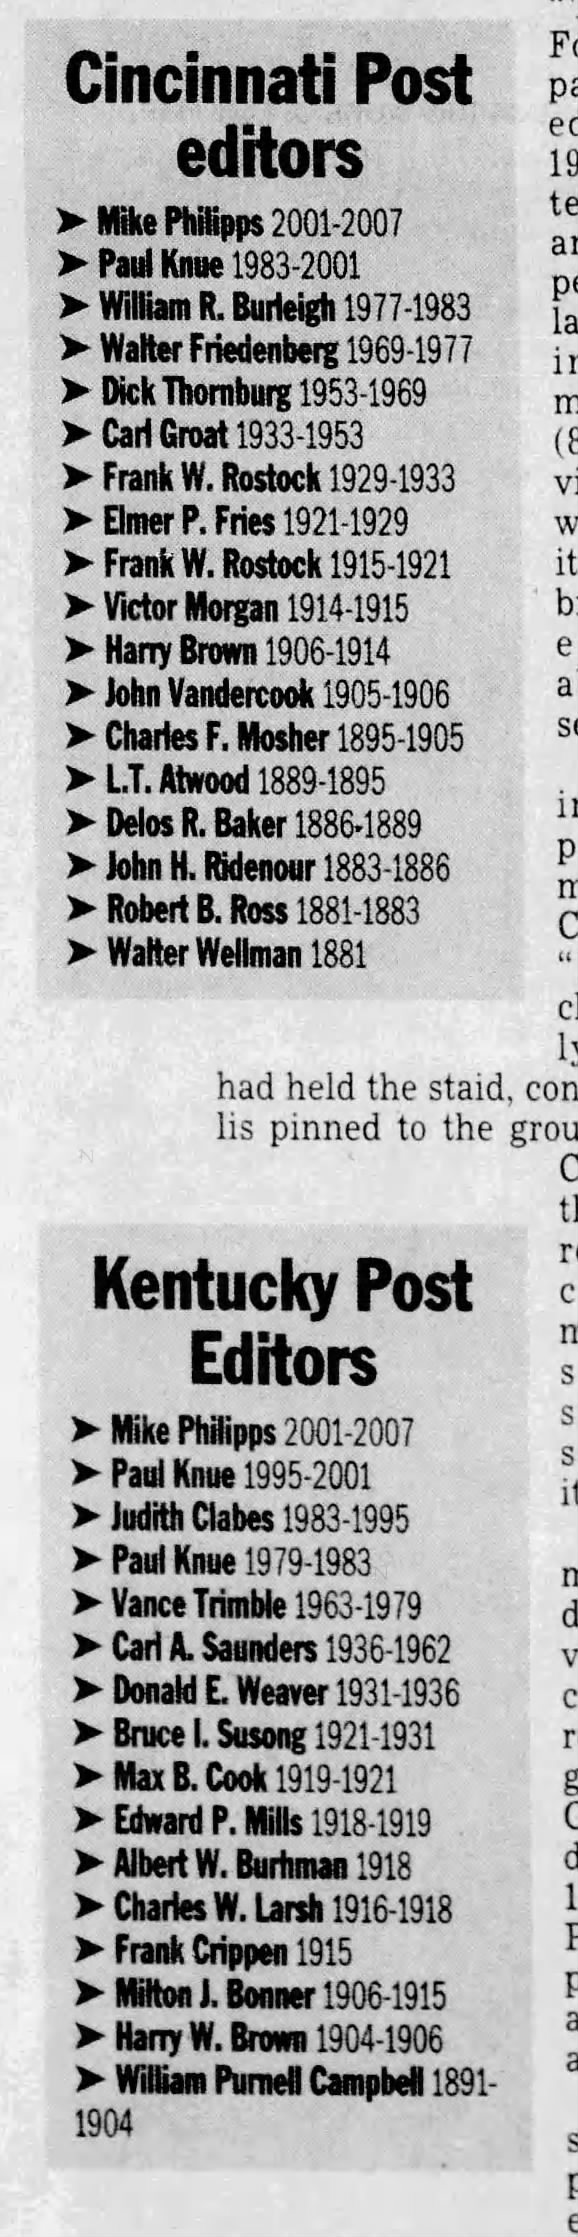 Cincinnati Post and Kentucky Post editors